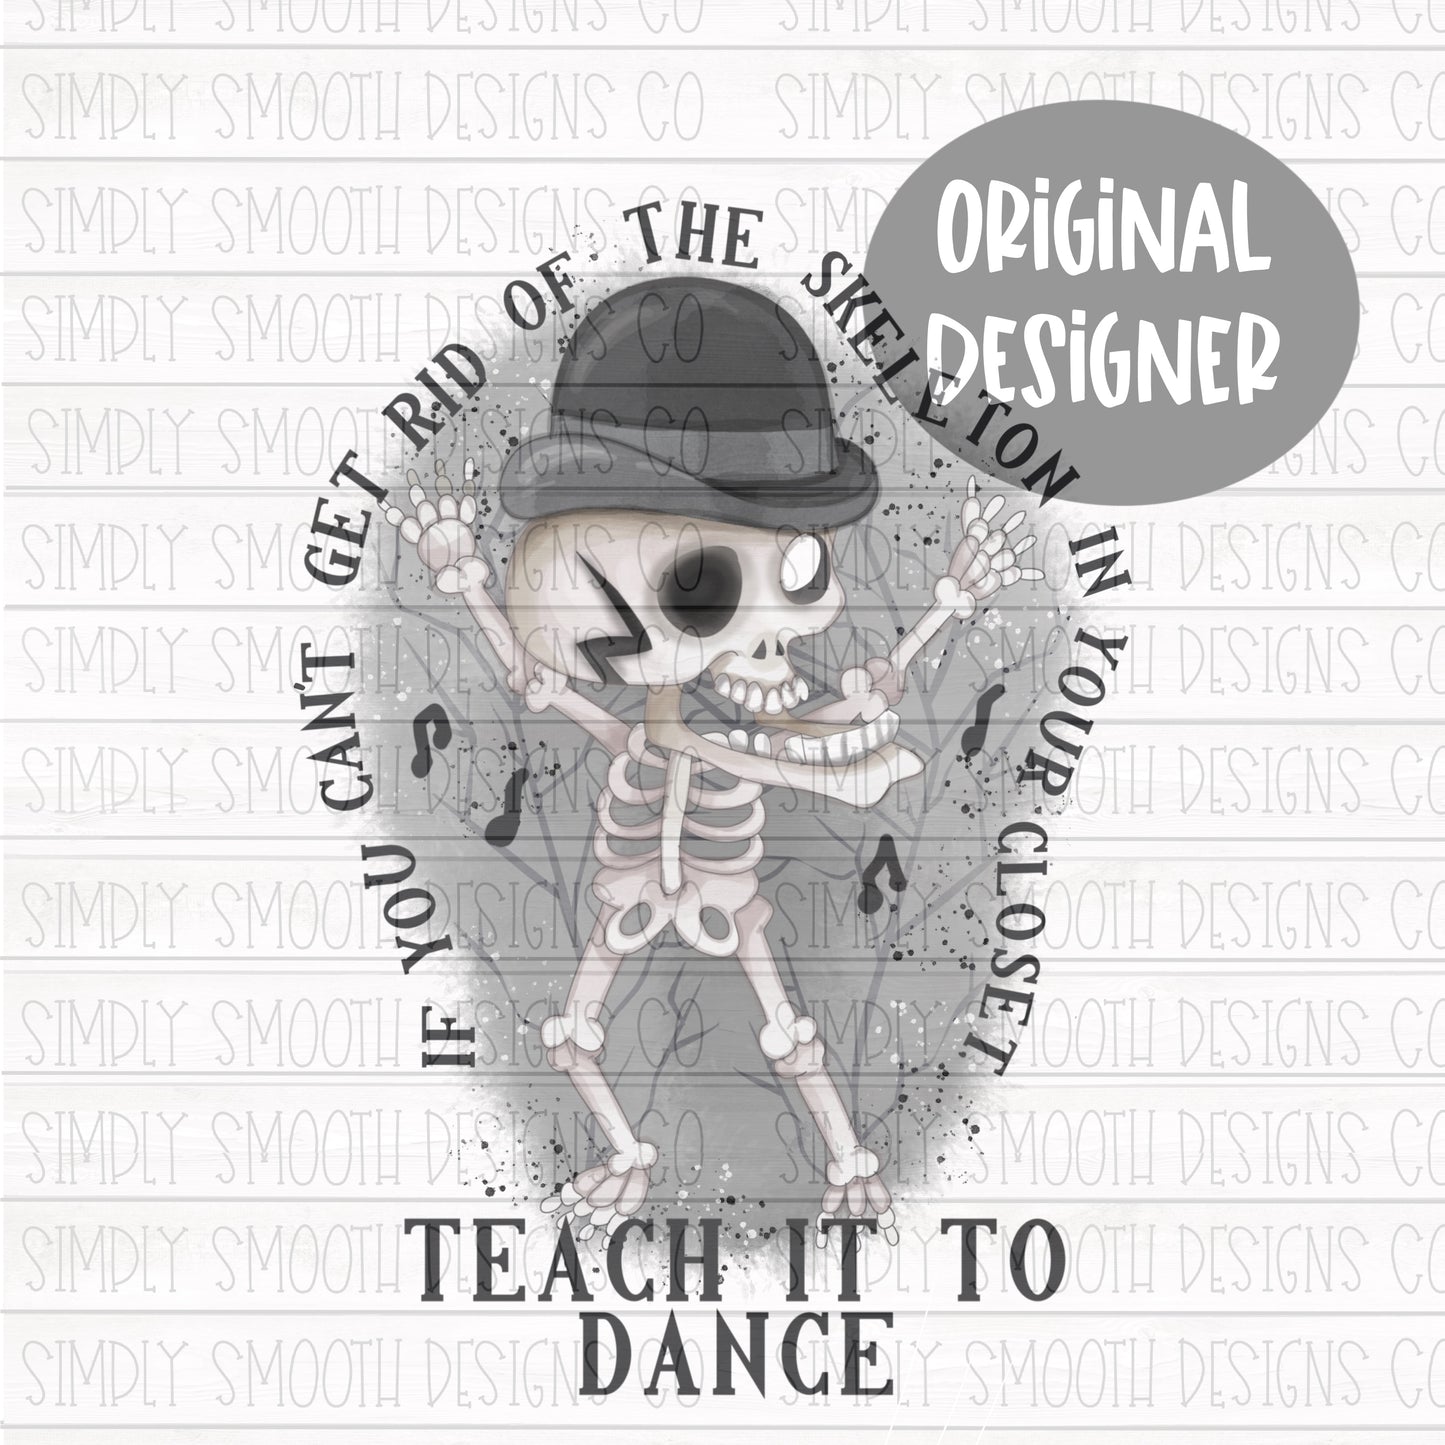 Teach it to dance skeleton